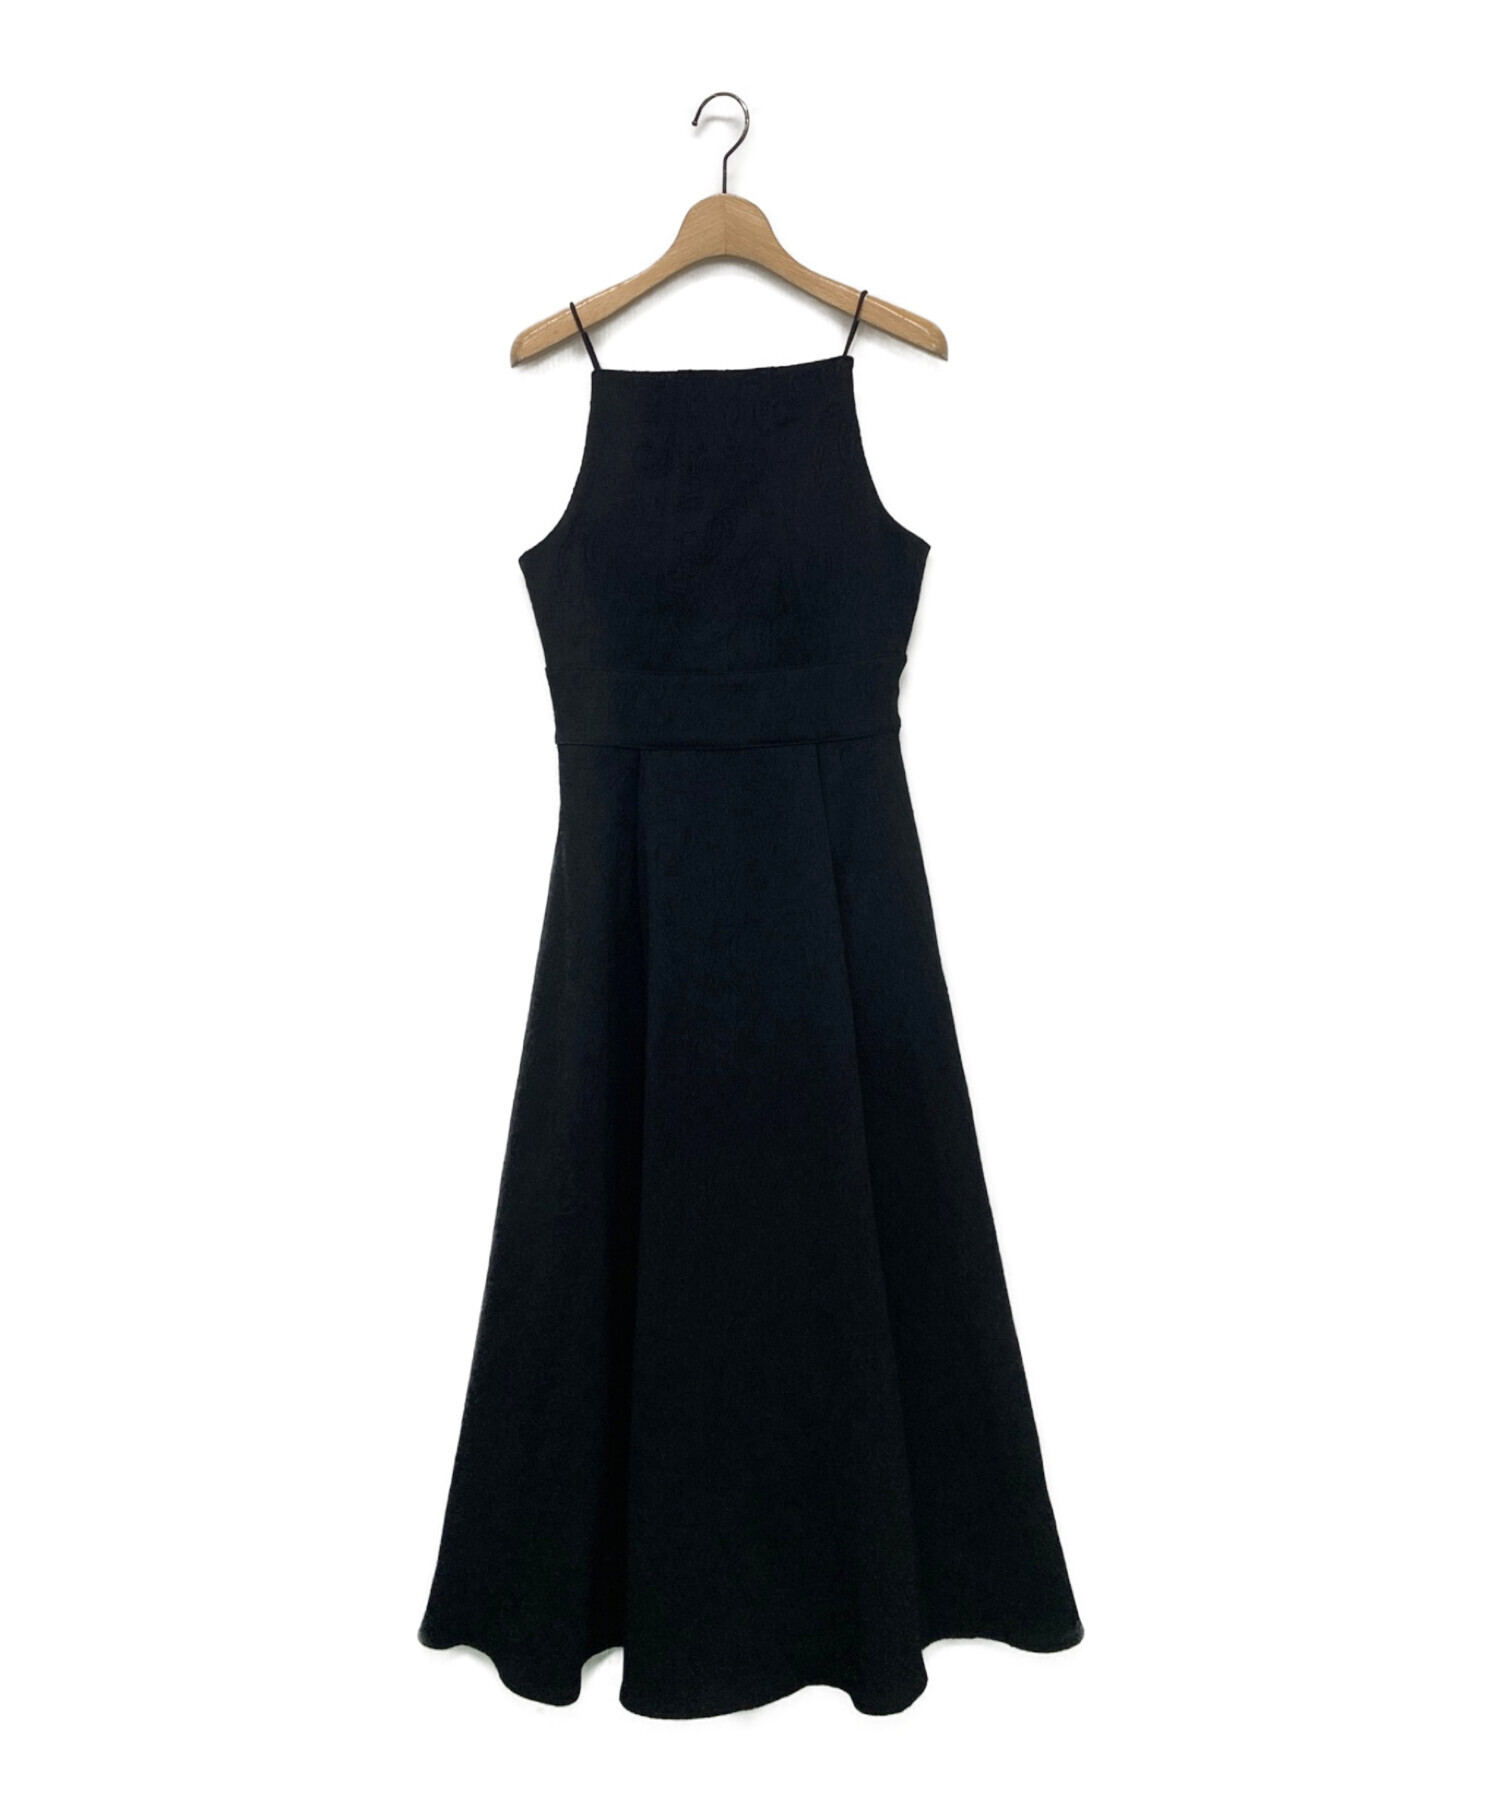 L'AUBE BLANC (ローブブラン) Open Back Jacquard Dress ブラック サイズ:S